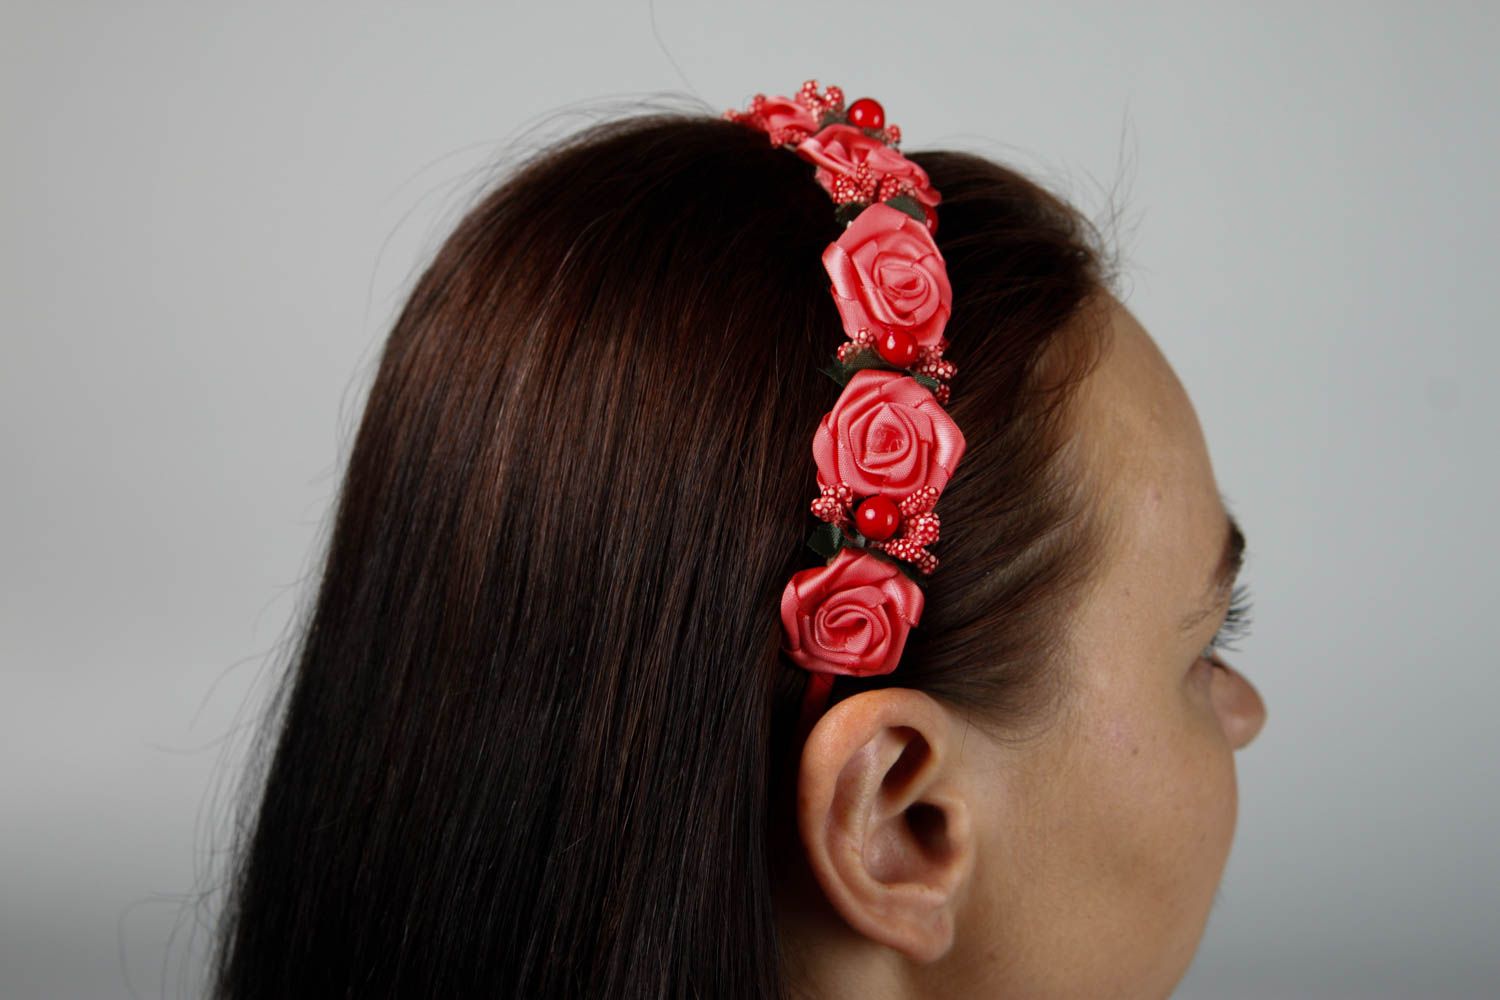 Unusual handmade flower headband hair bands head wreath flowers in hair photo 2